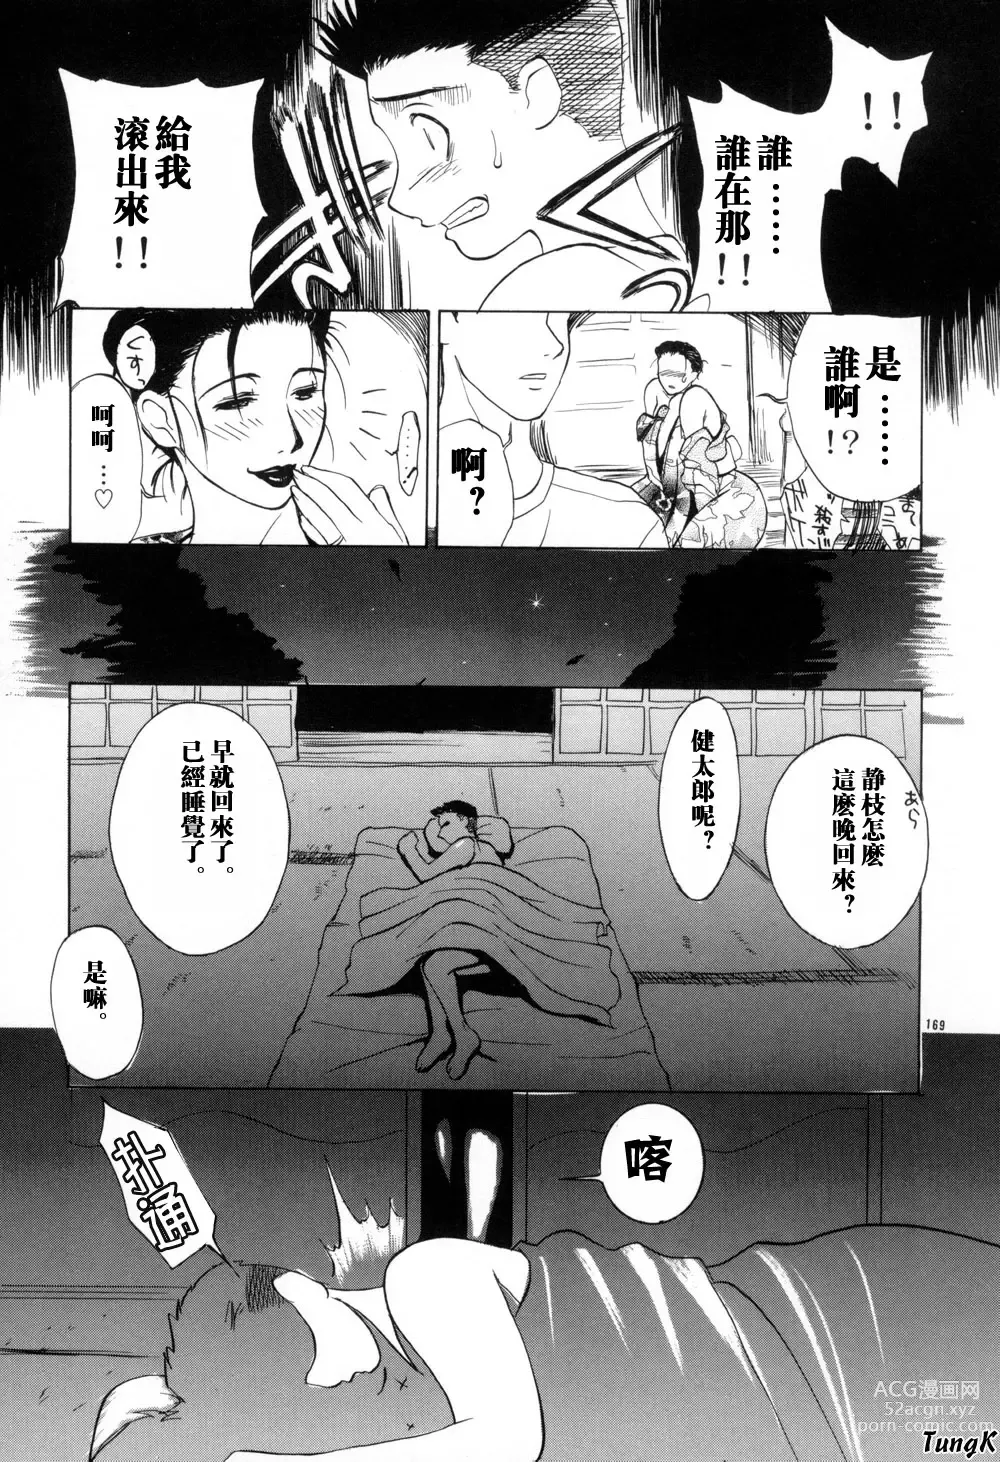 Page 169 of manga Zoku Enbo -Futari-